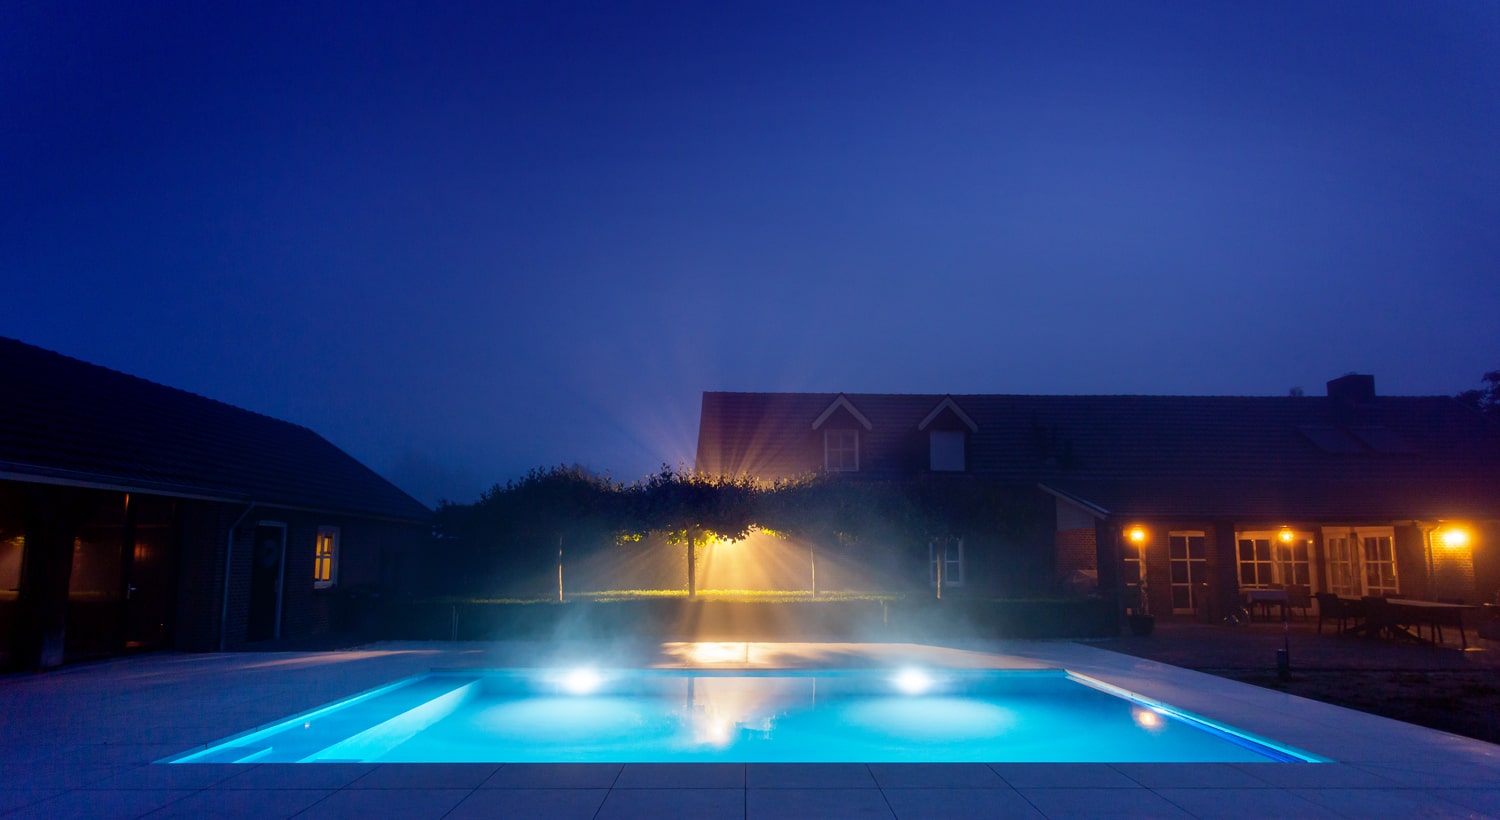 Skimmer zwembad -pool by night - DIEPWATER